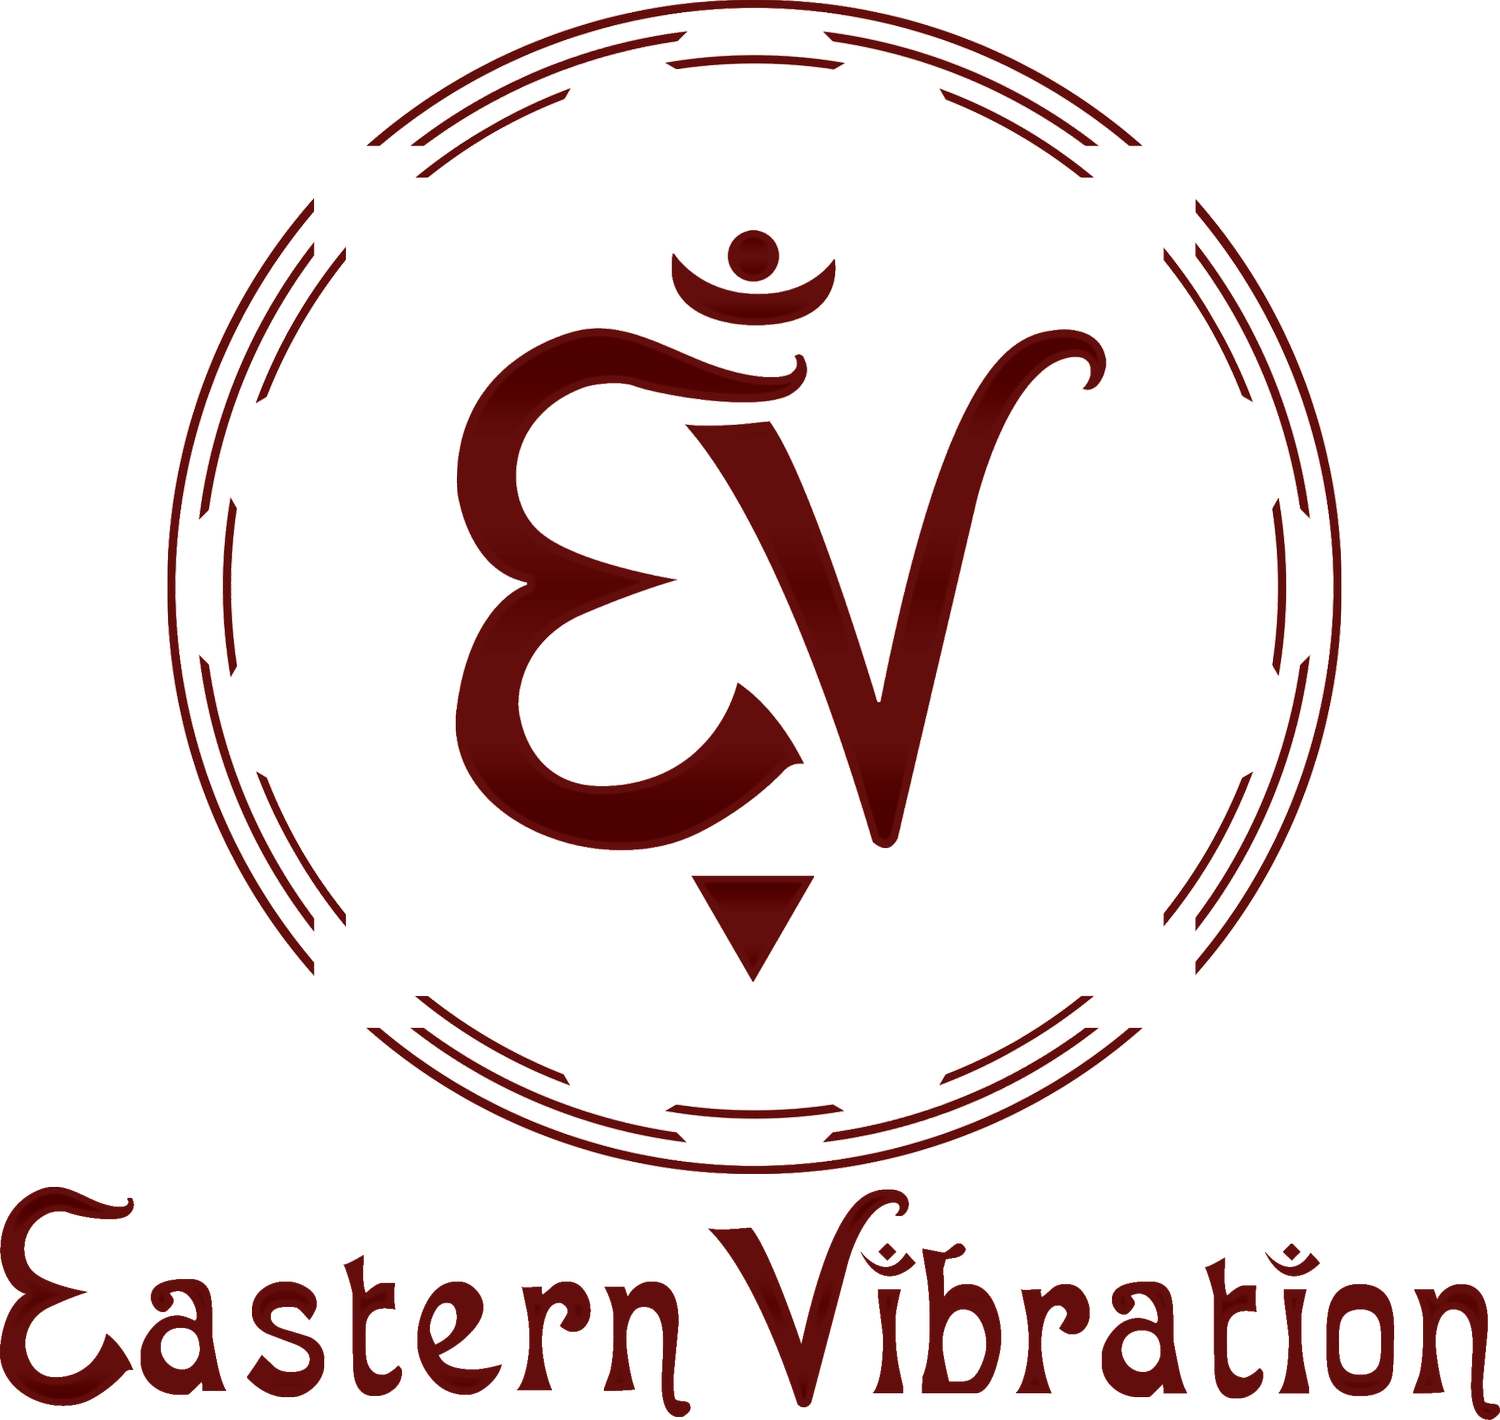 Eastern Vibration